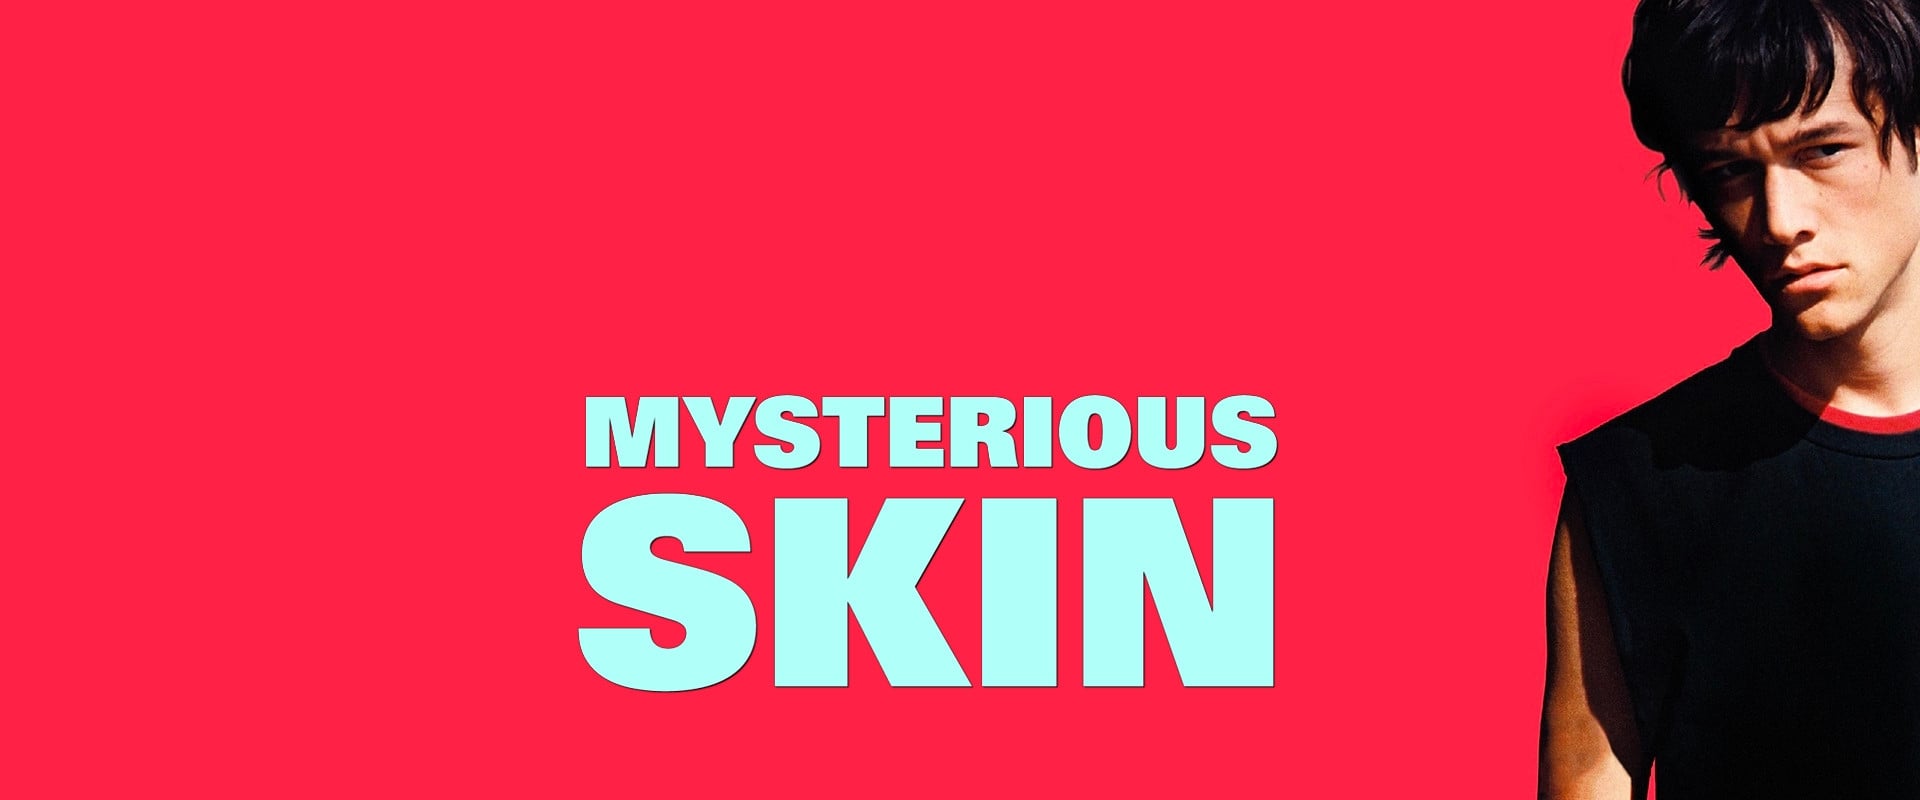 Mysterious Skin - Pele Misteriosa